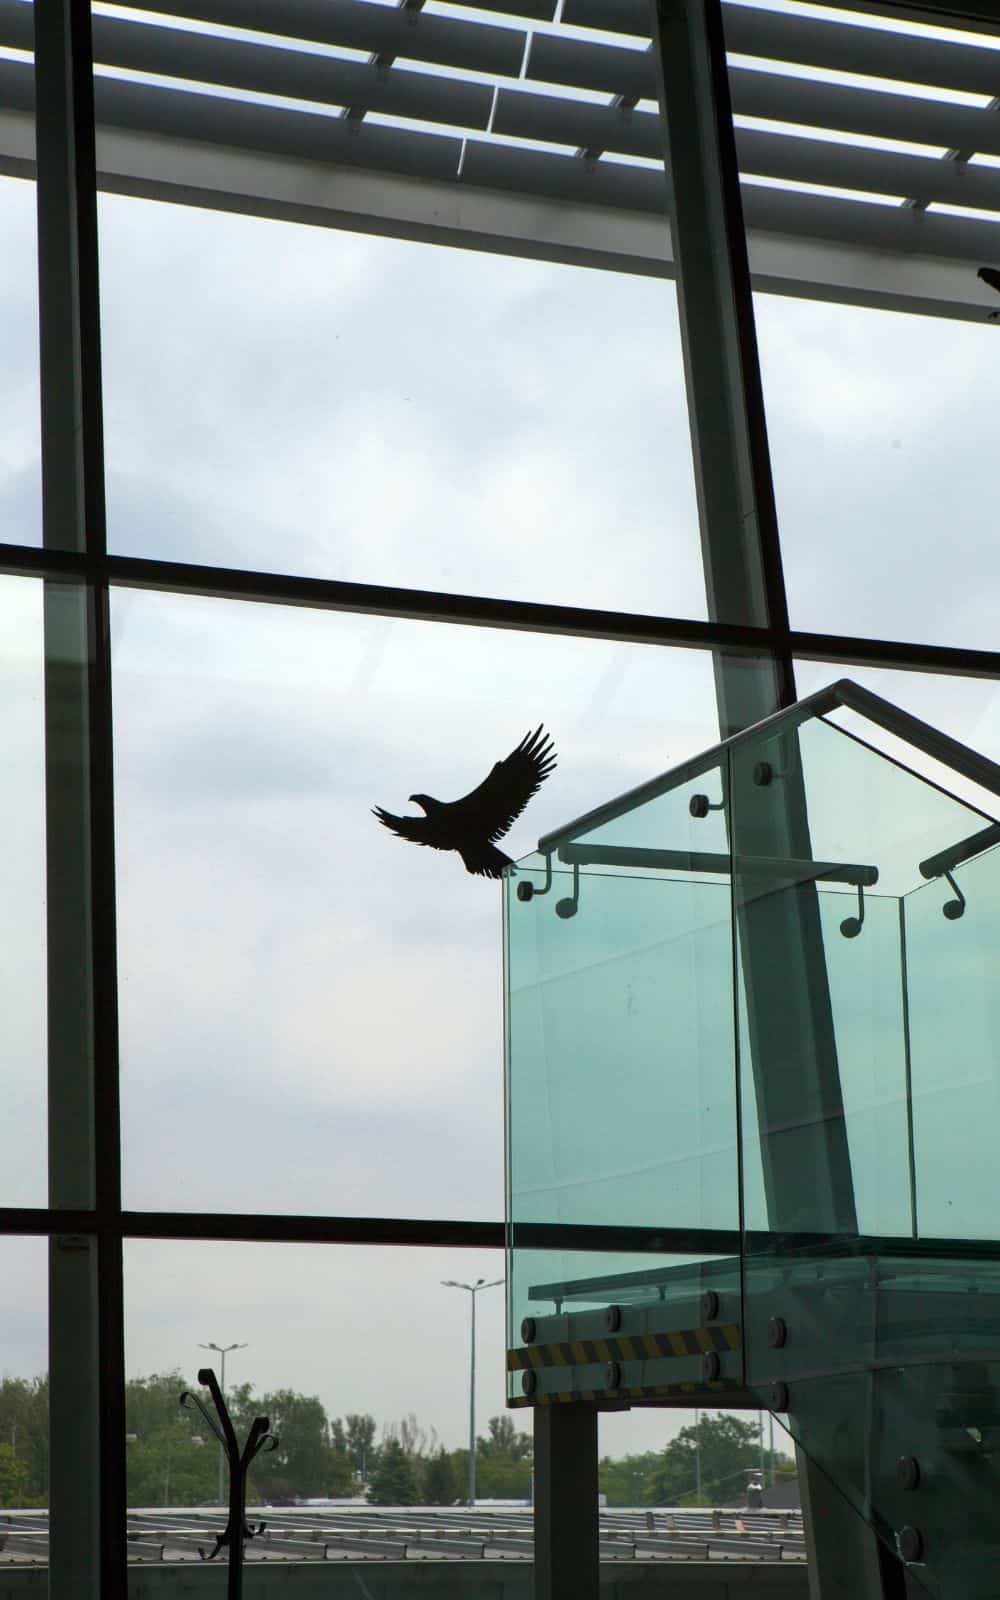 How to interpret a bird hitting your window